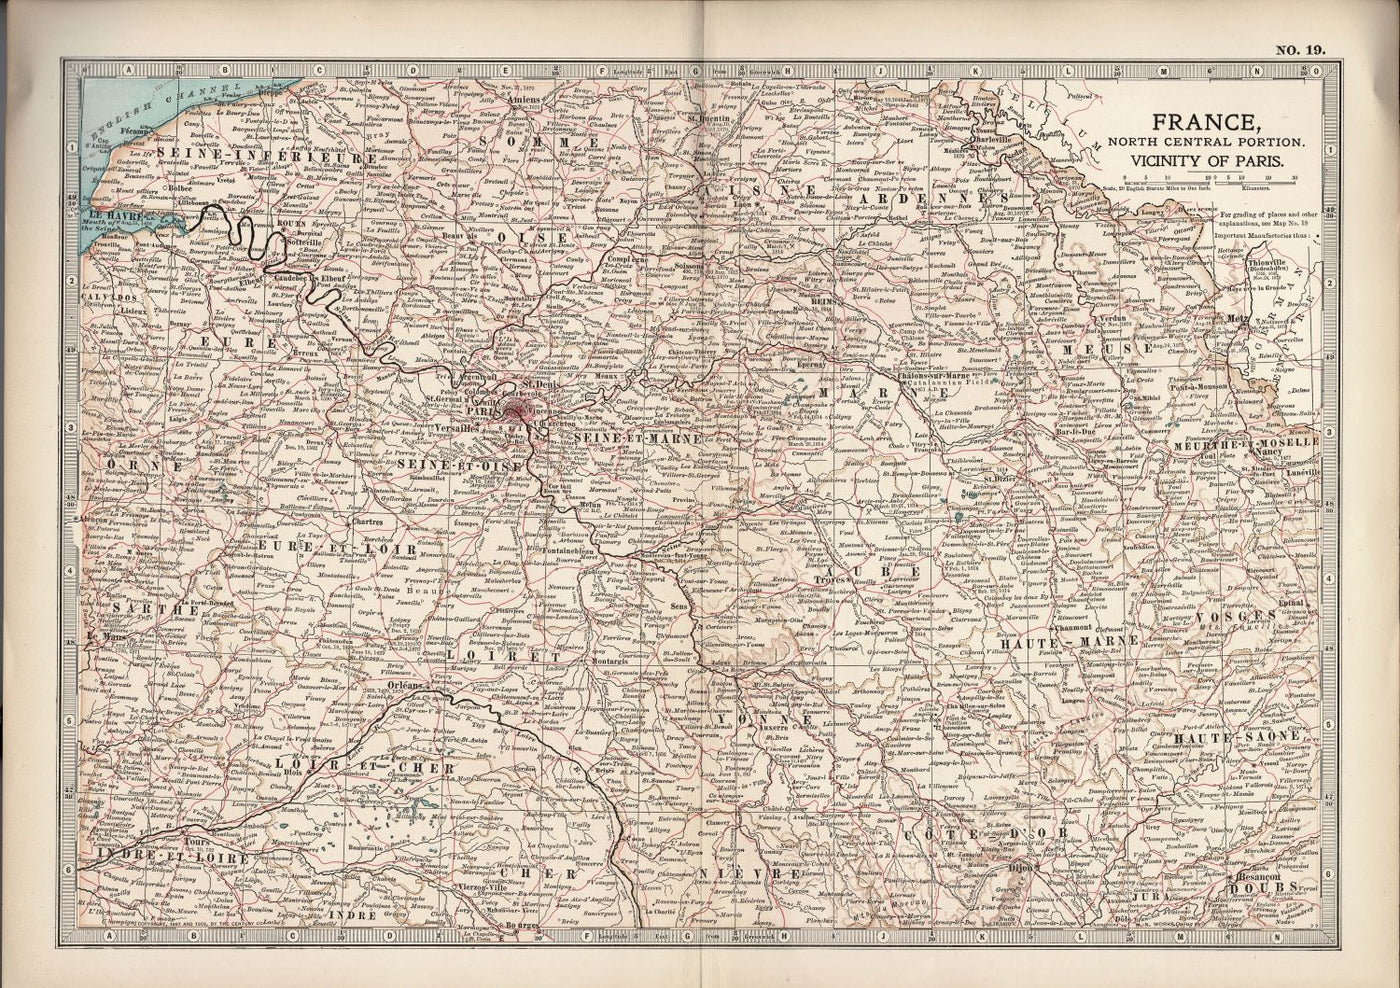 France North Central and Paris antique map Encyclopedia Britannica 1903